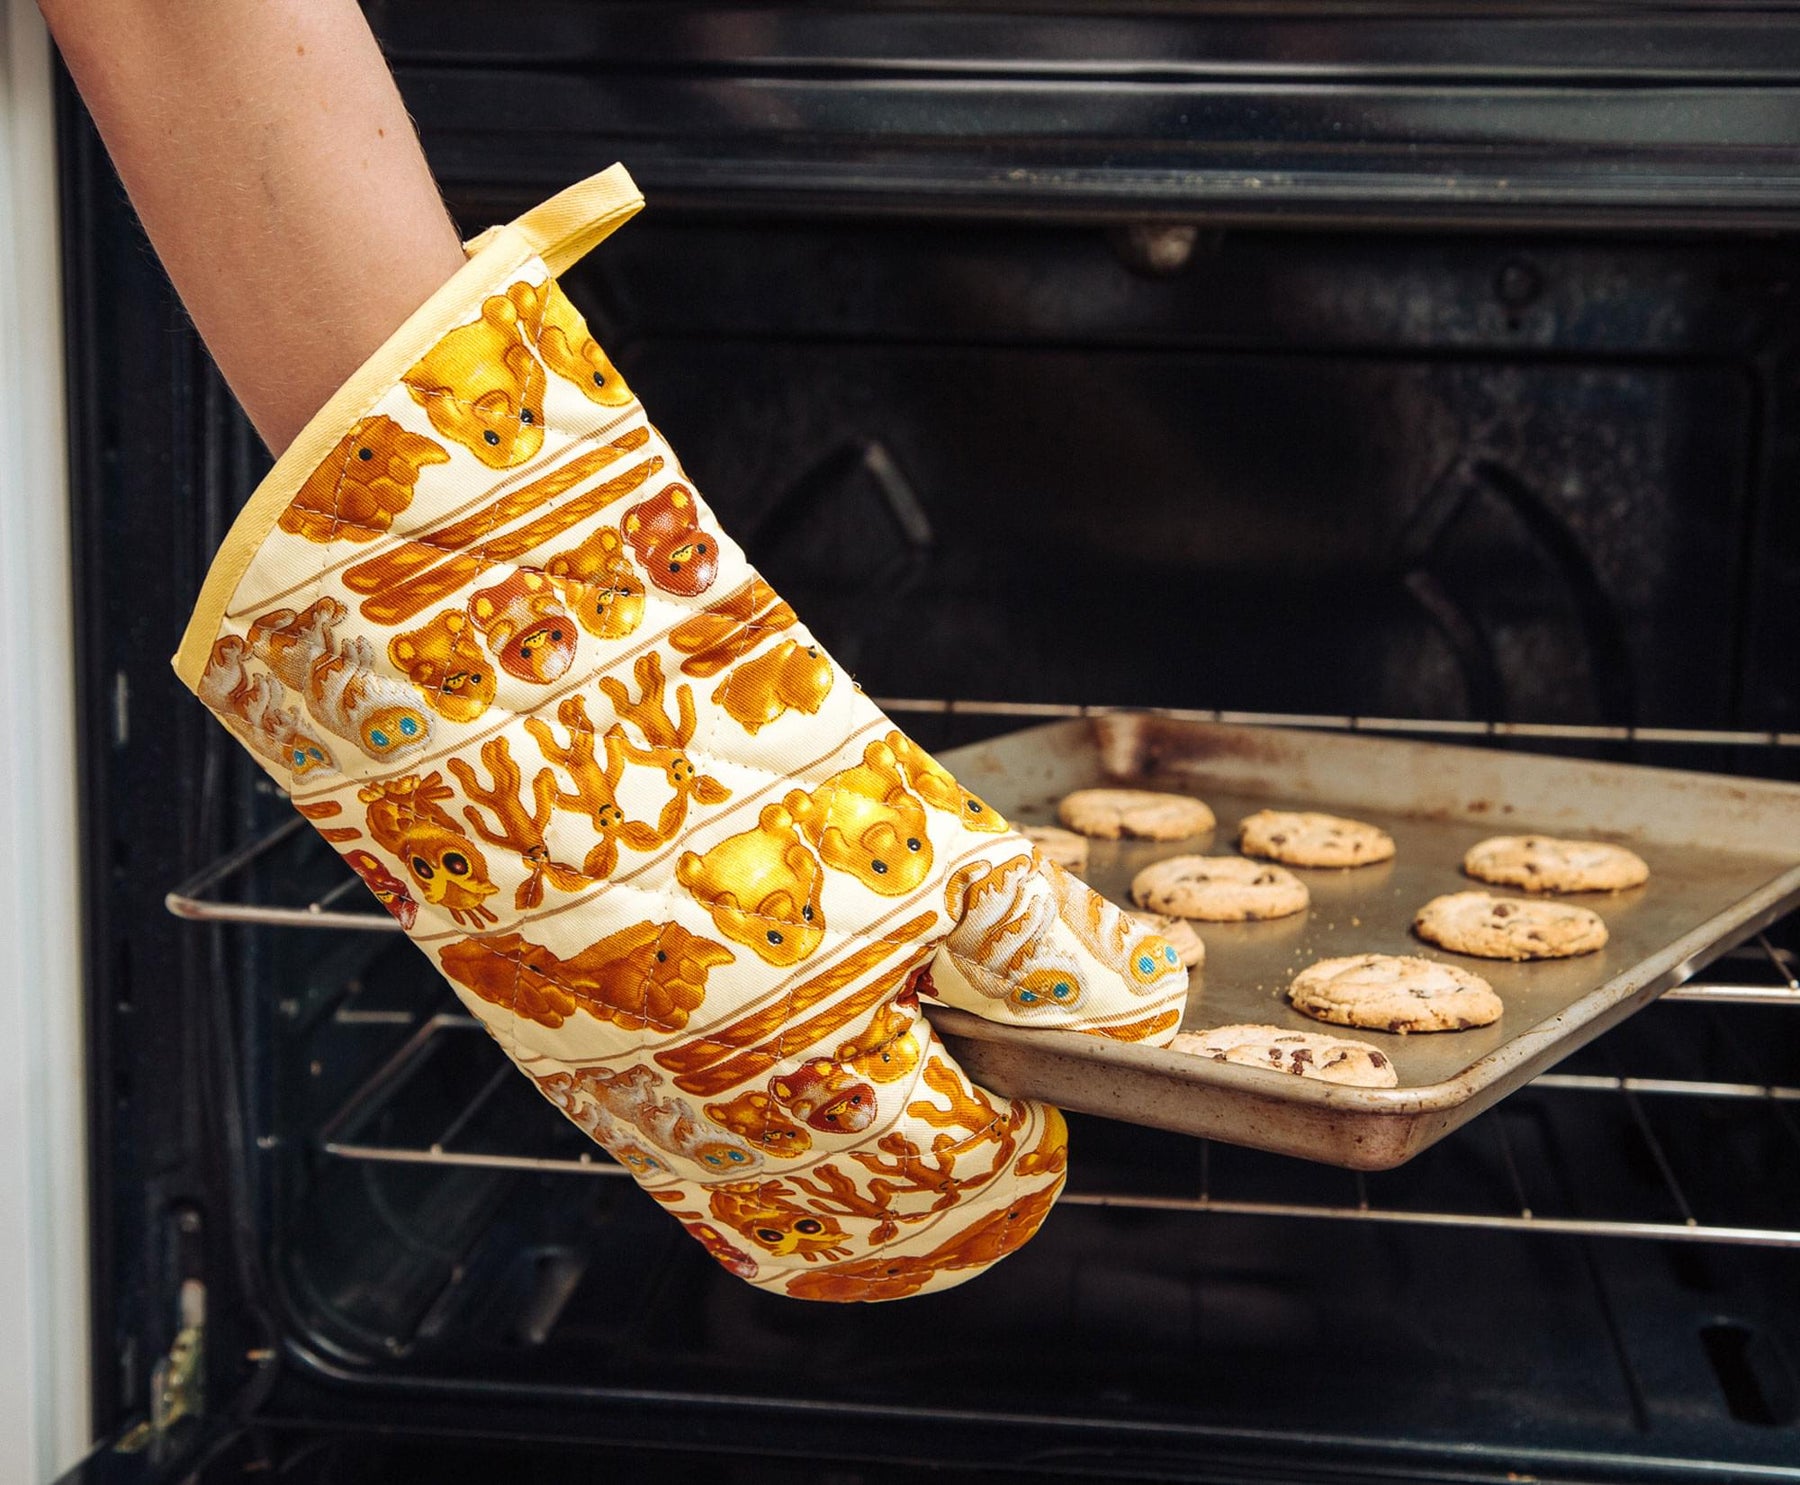 Fantastic Beasts Kowalski Quality Baked Goods Kitchen Oven Mitt Glove